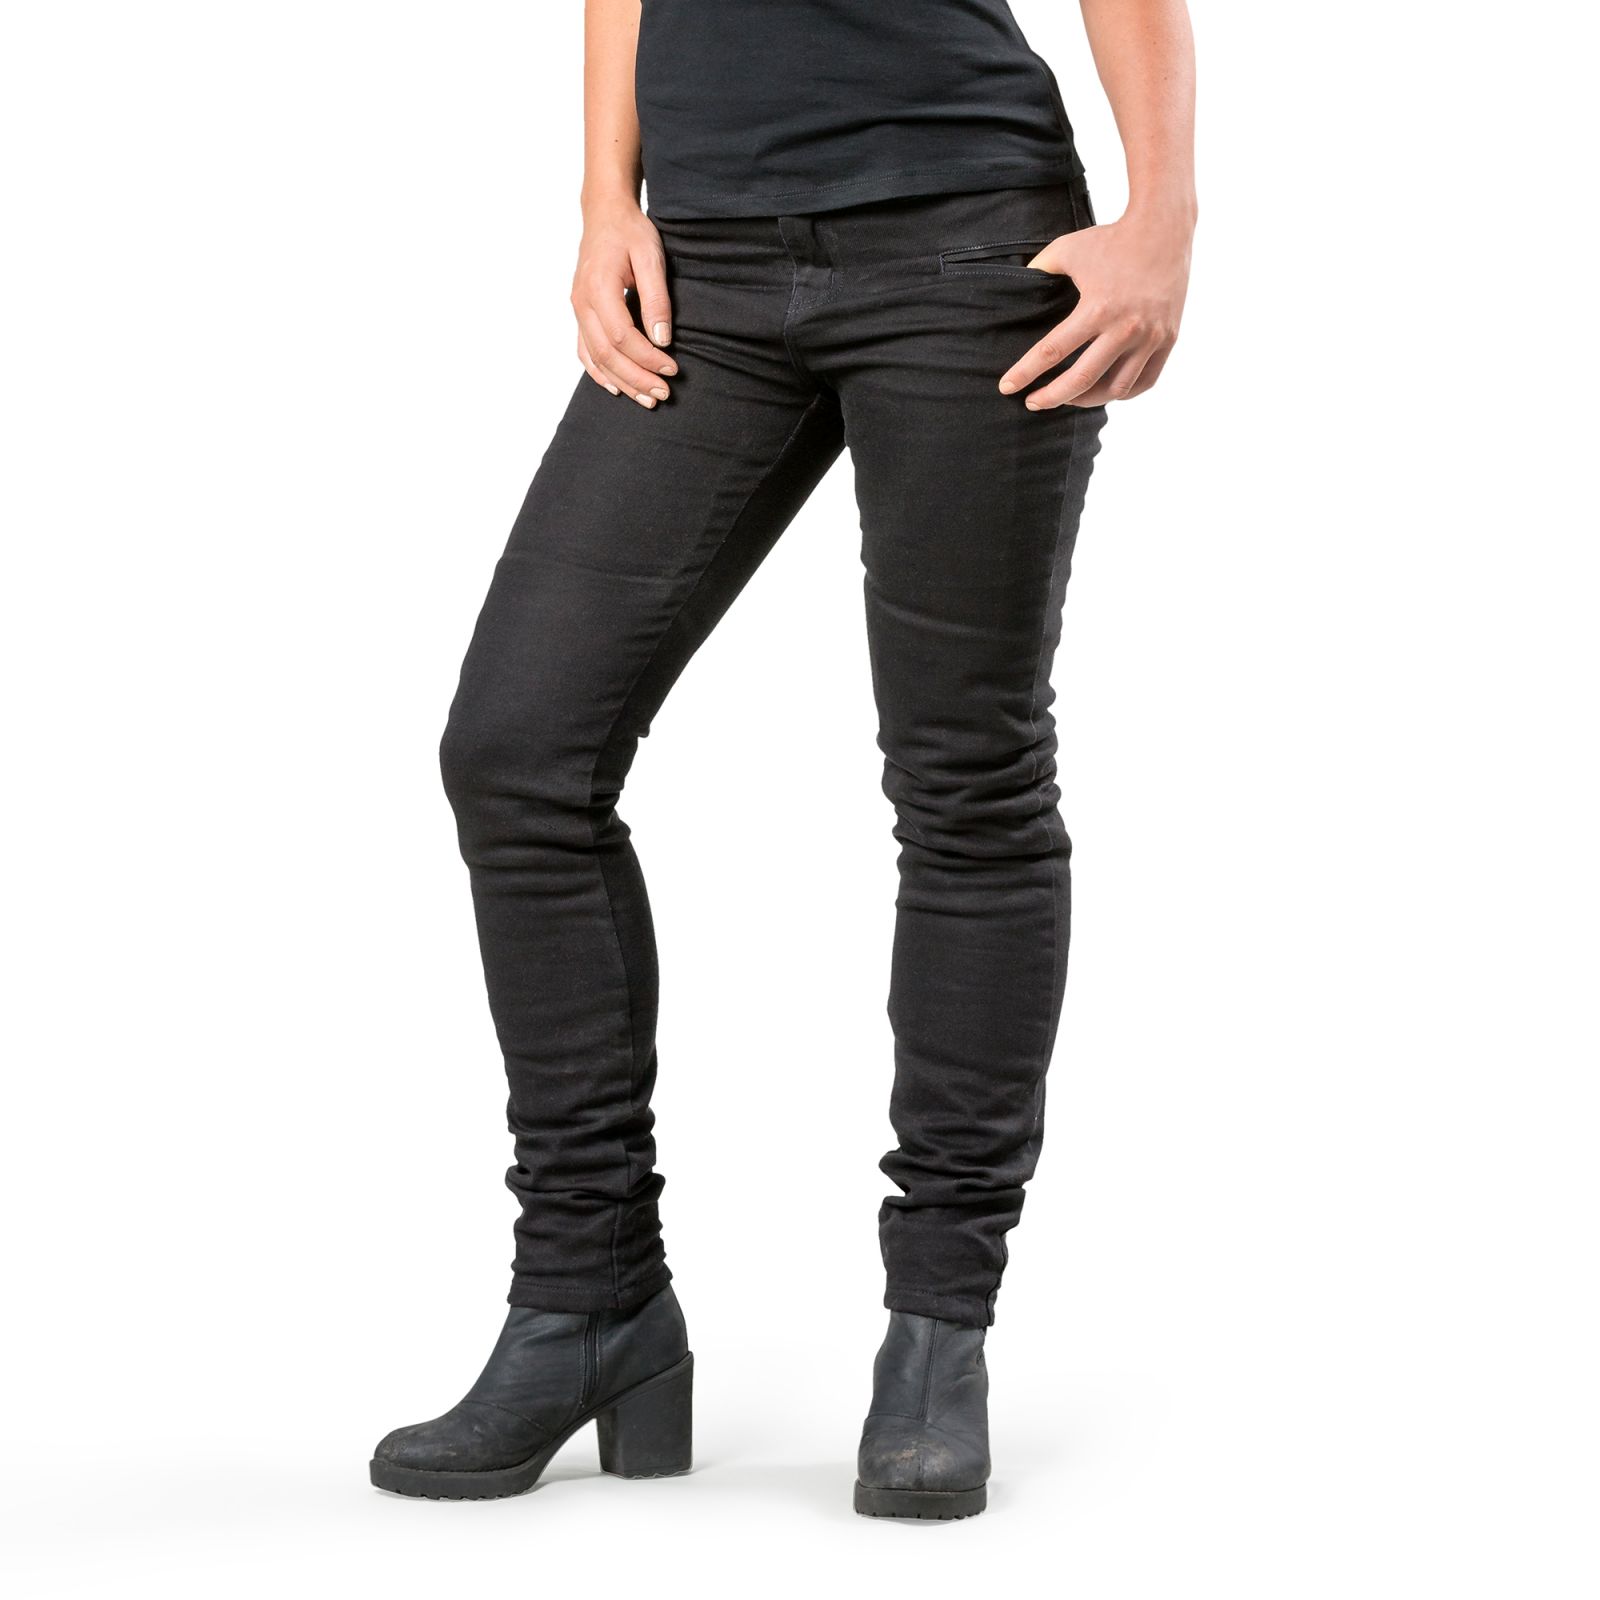 https://www.ridersline.com.au/shop/934-atmn_large_2x/draggin-jeans-twista-black-ladies.jpg